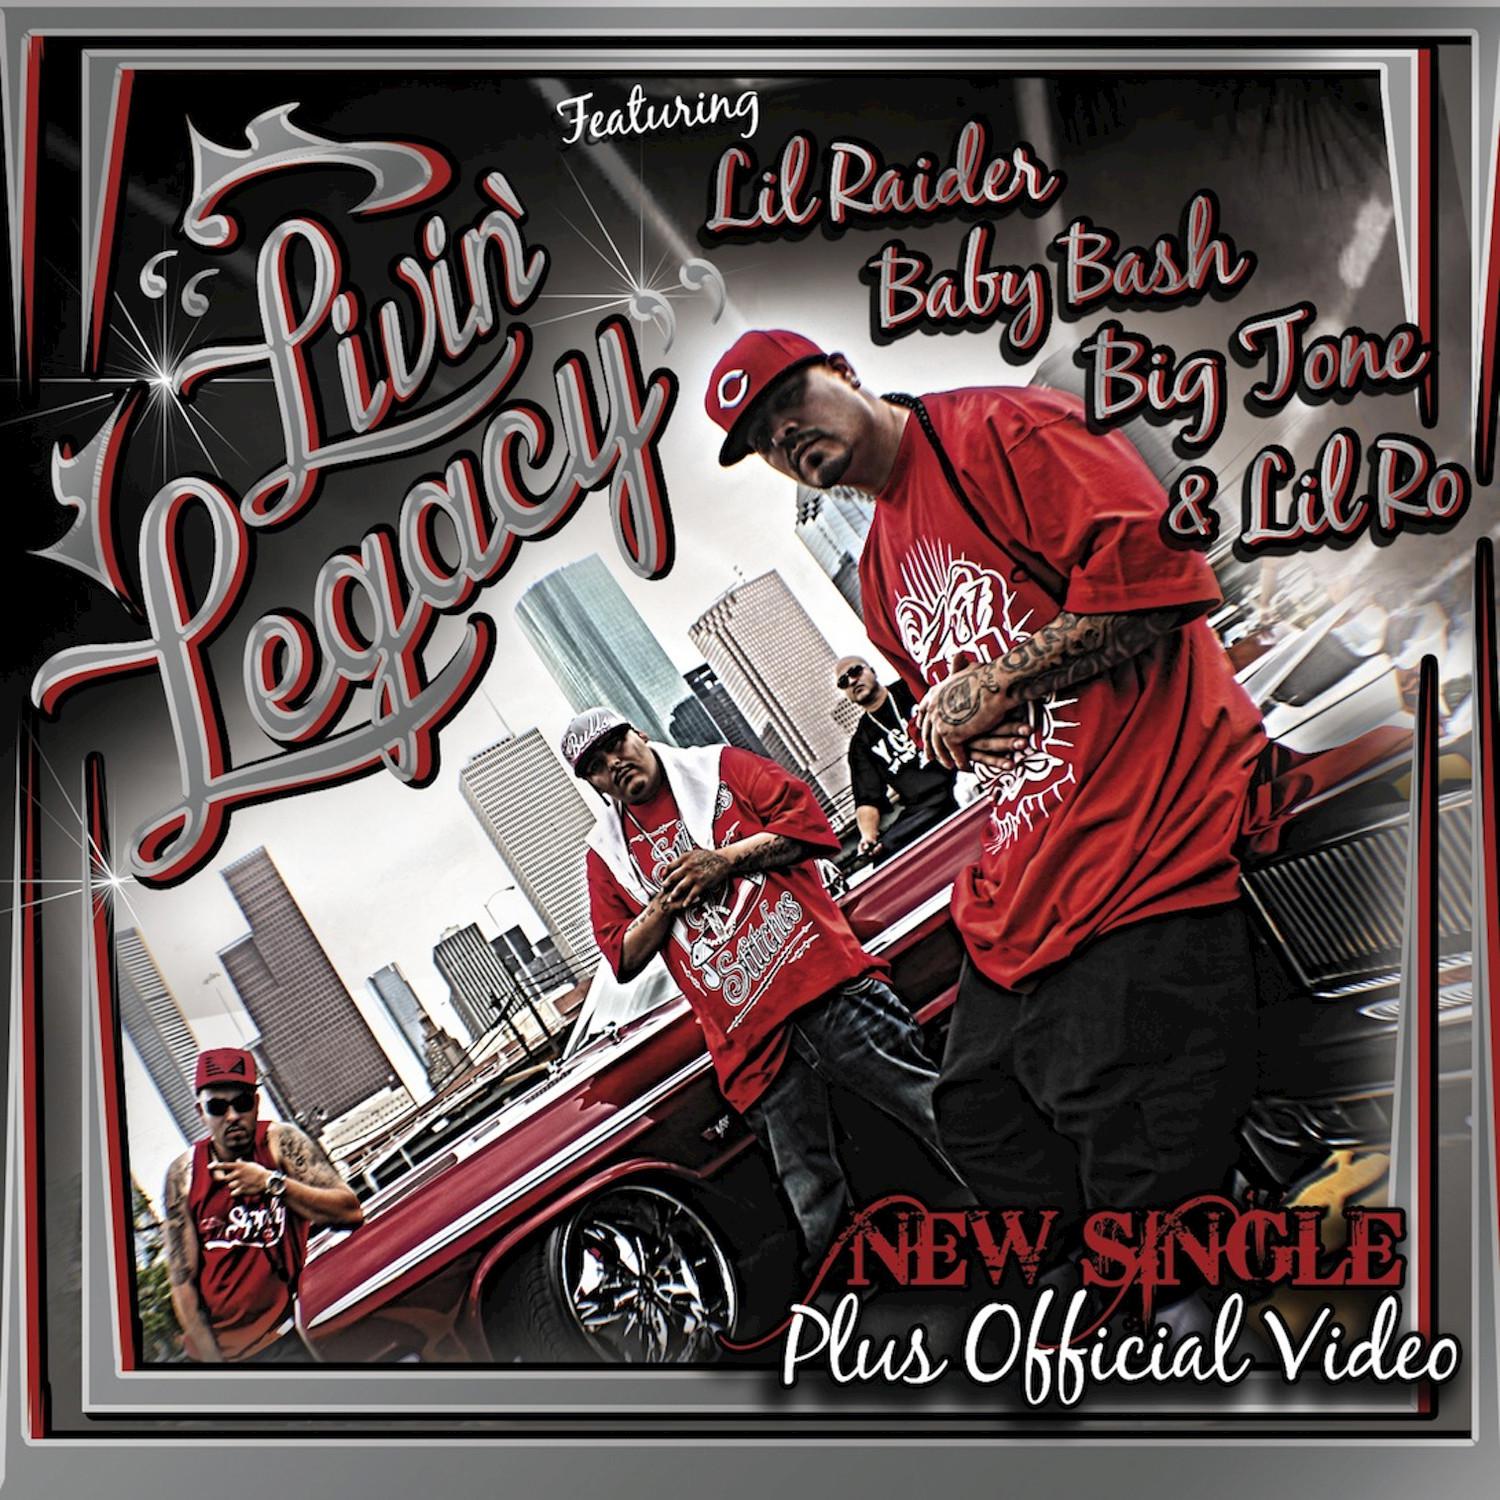 Livin Legacy (feat. Lil Raider, Baby Bash, & Lil Ro) - Single